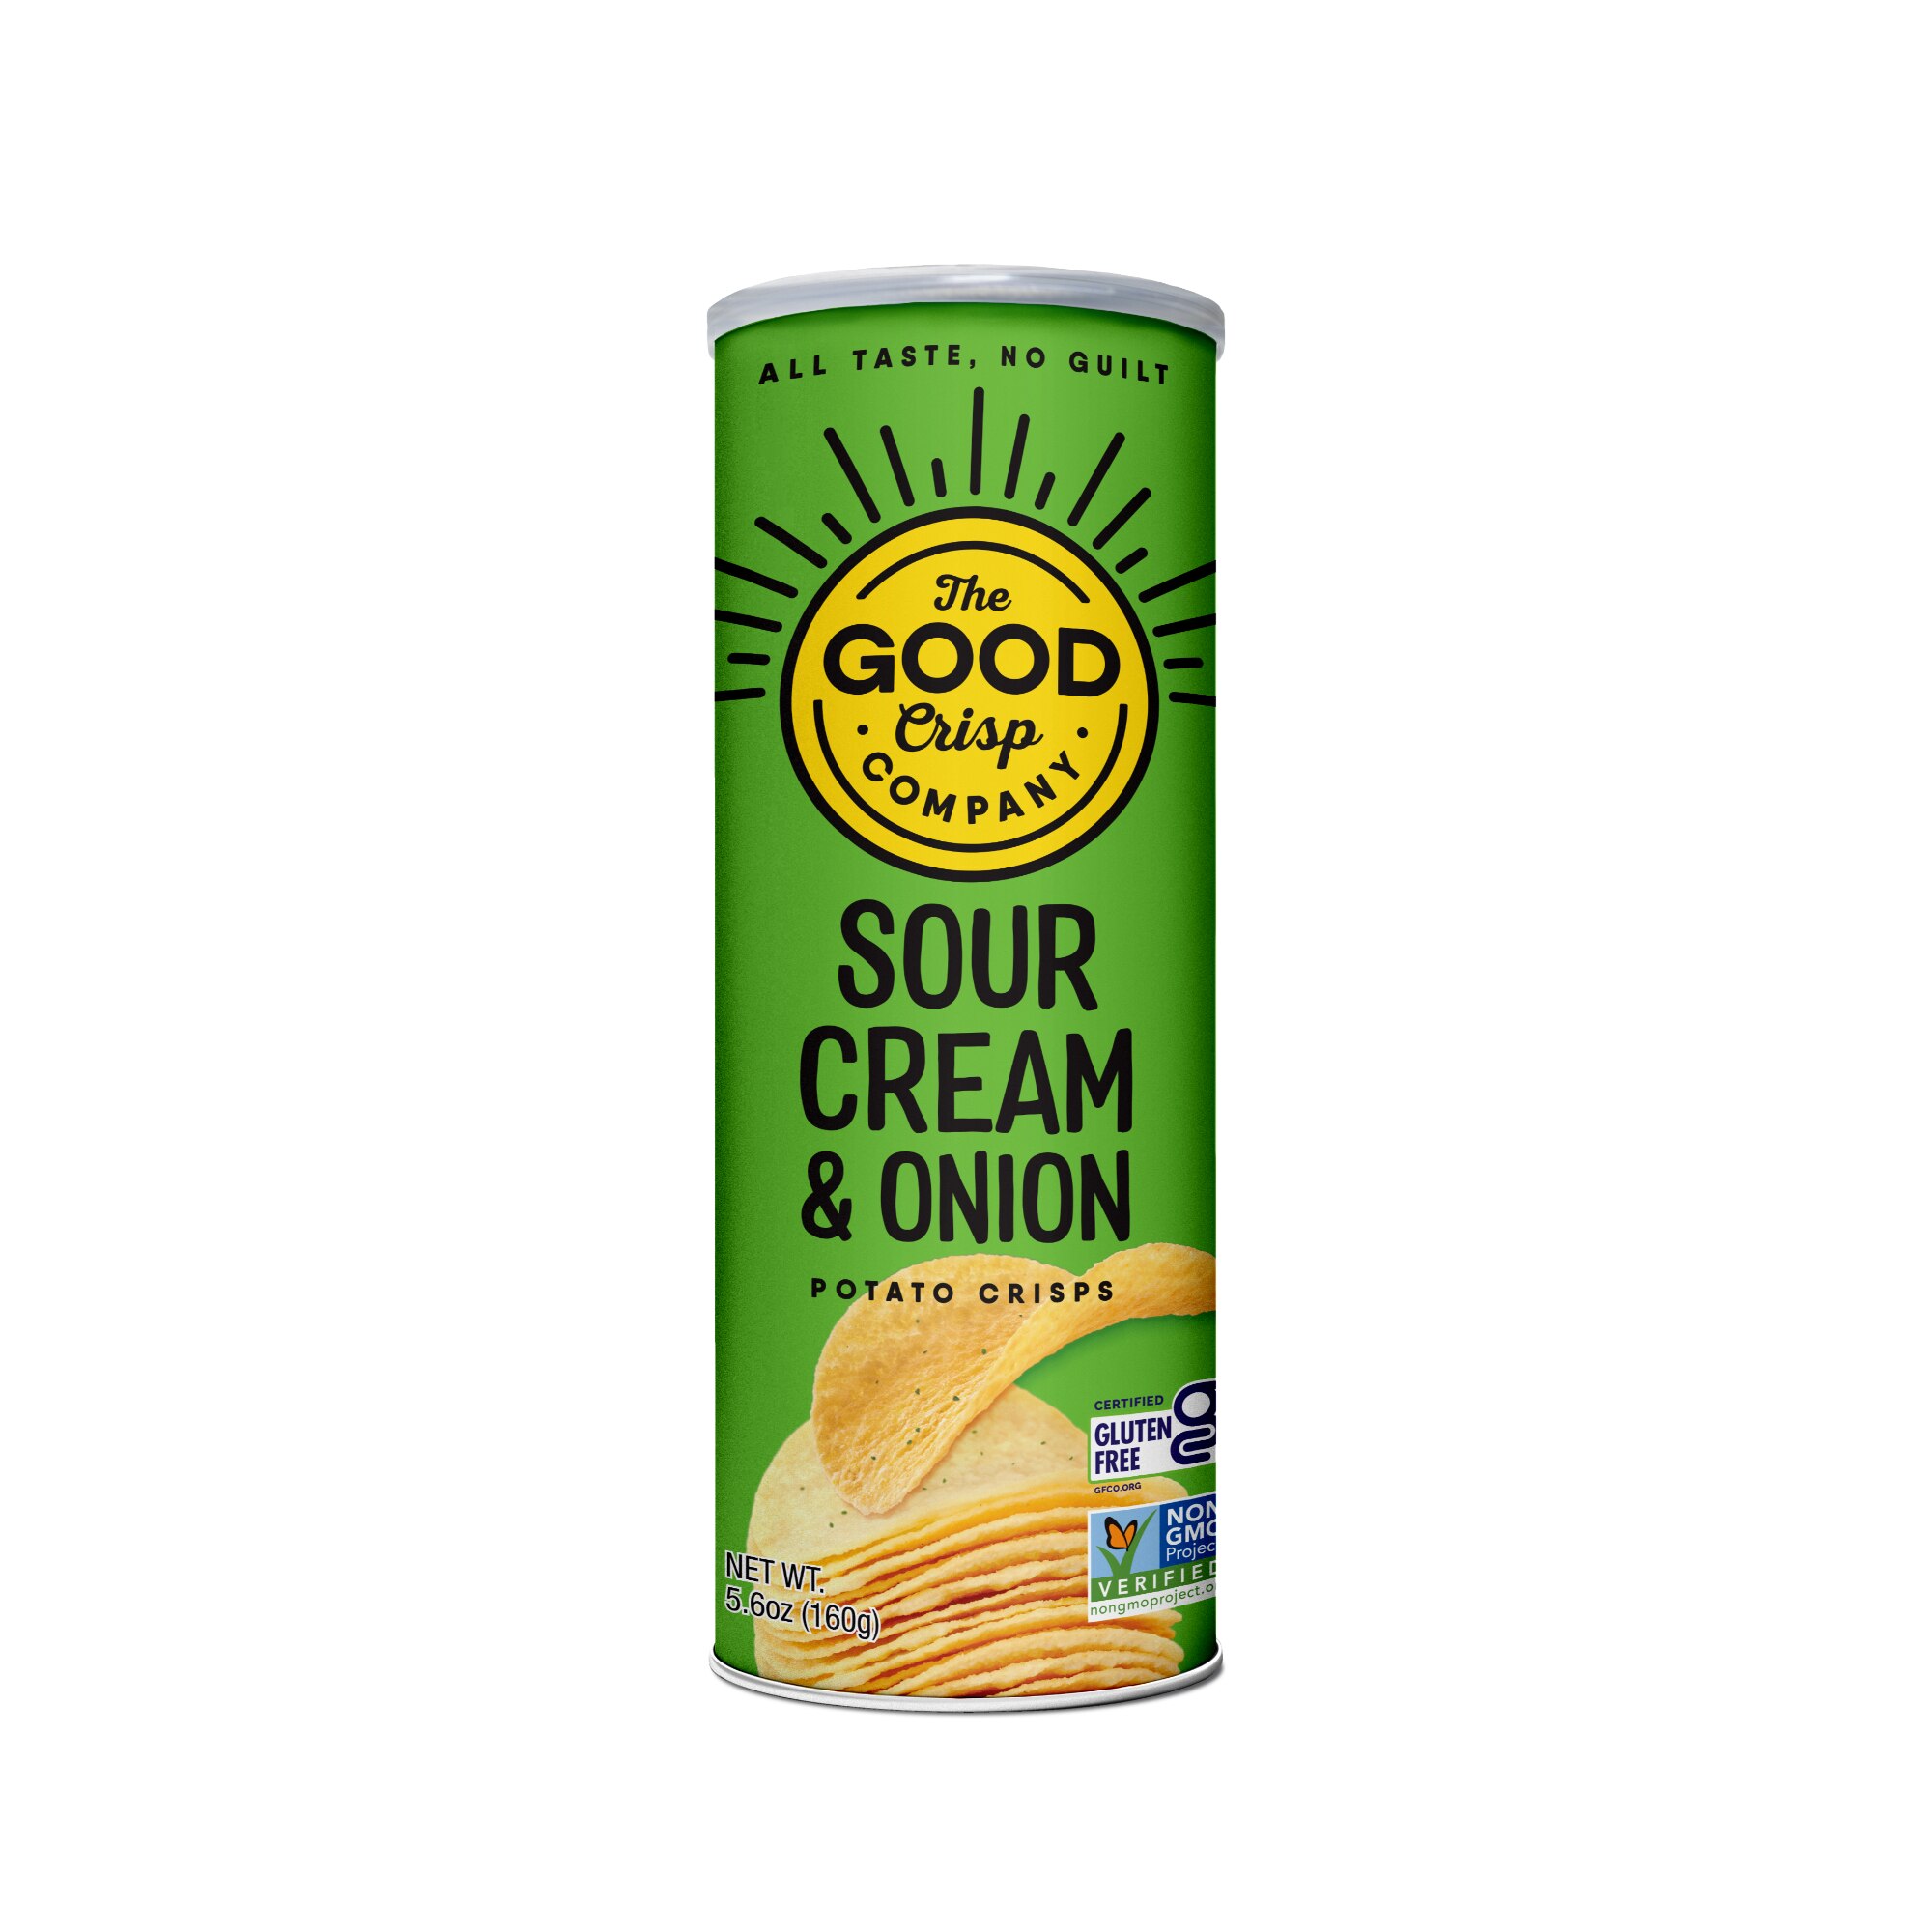 The Good Crisp Company Sour Cream & Onion Gluten Free Potato Chips, 5.6 OZ